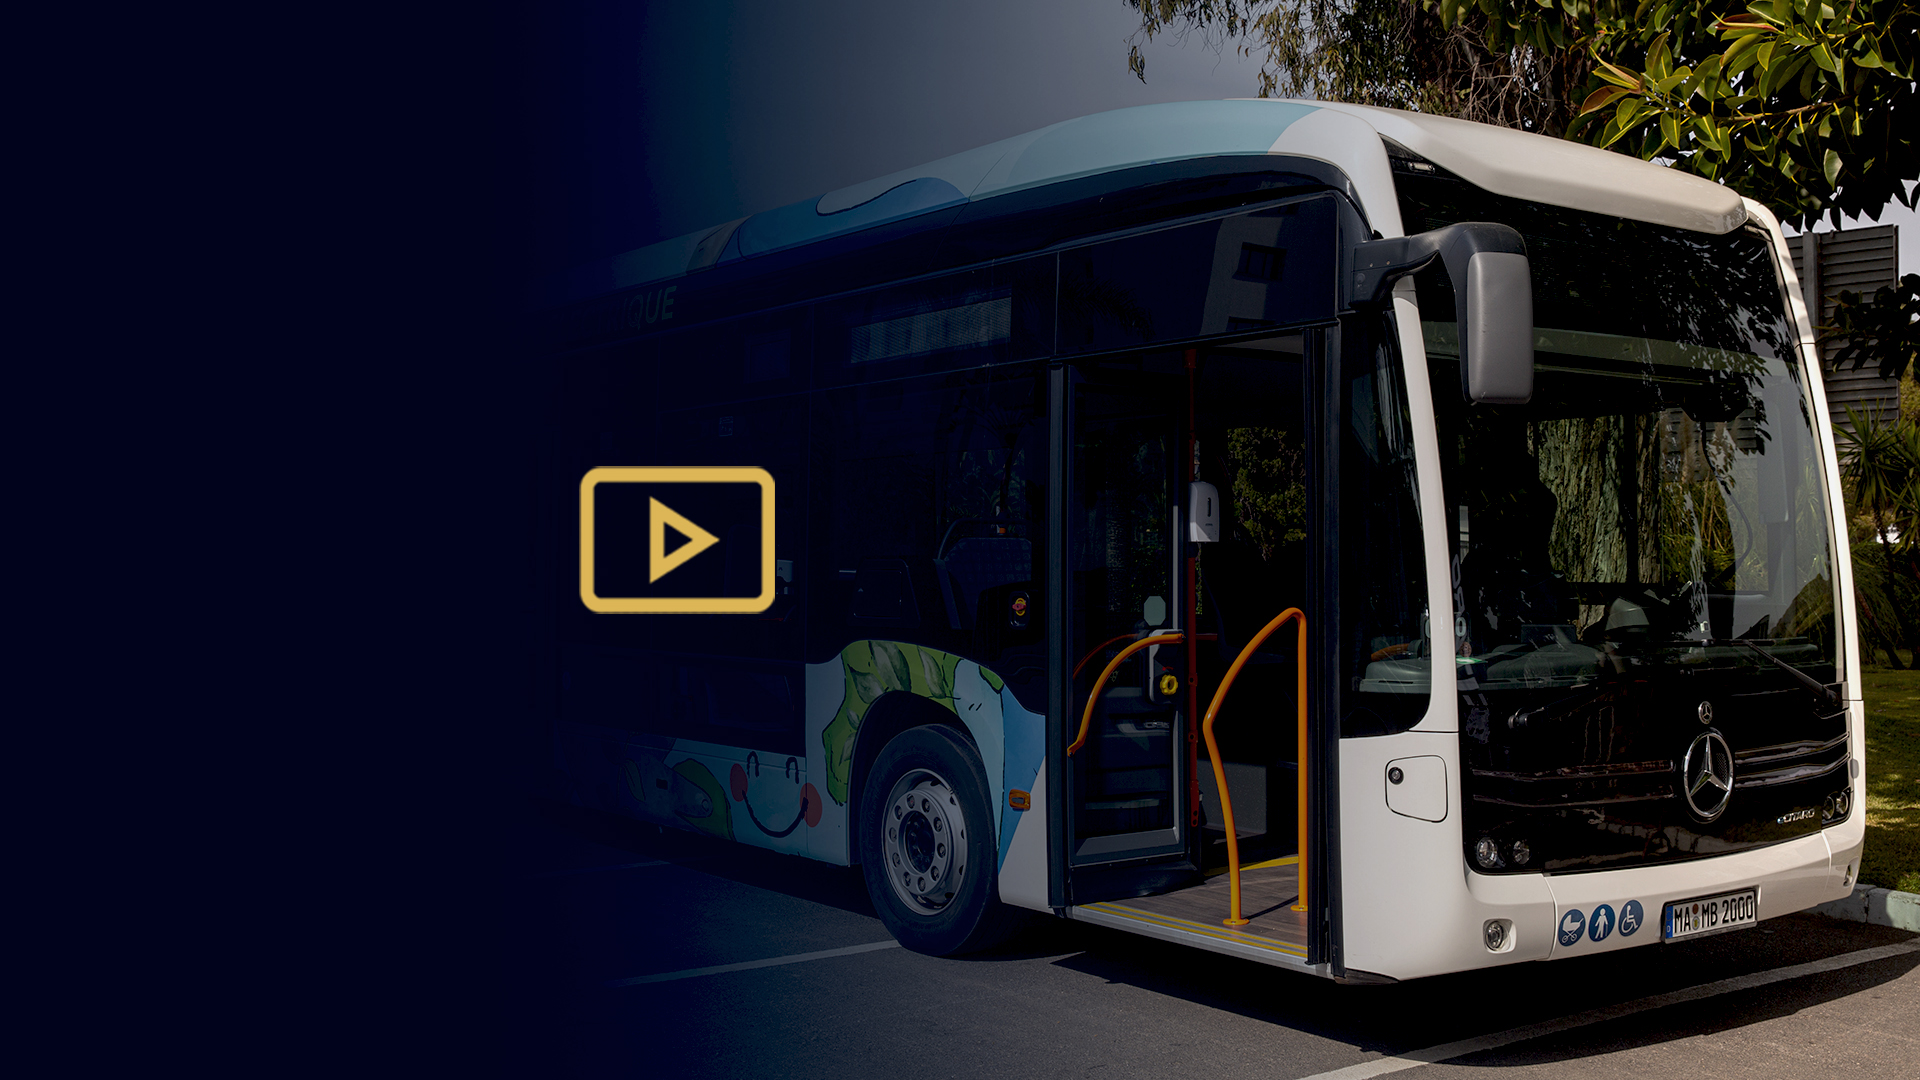 Maroc-Ni9ach21-Asmaa Rhlalou-Rabat-Bus-Electrique-Transition-energetique-Mobilite-Verte